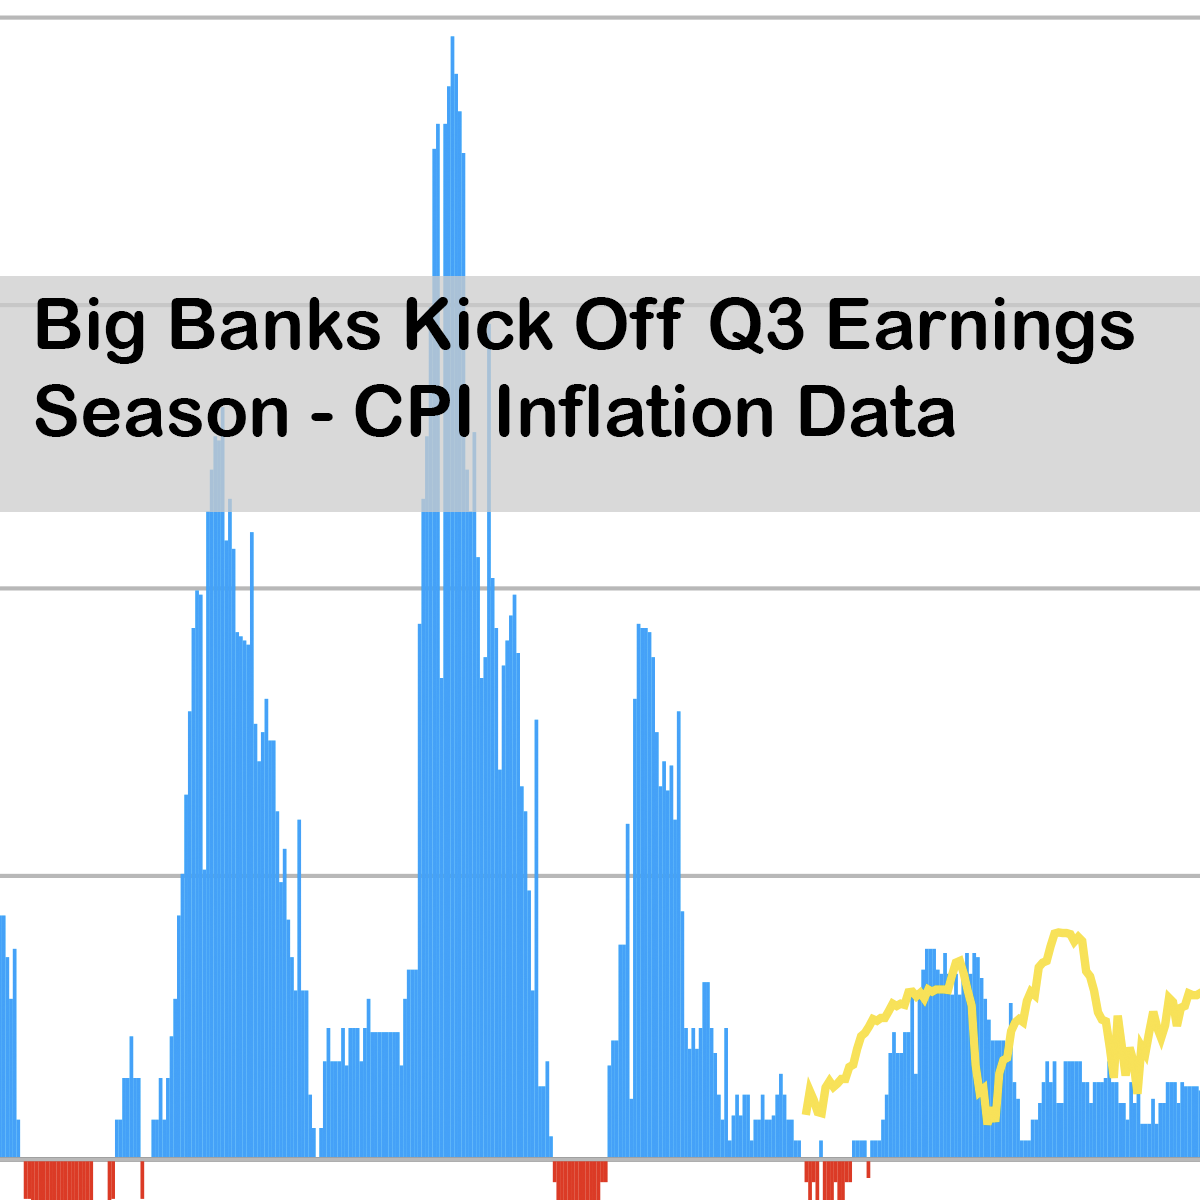 Big Banks Kick Off Q3 Earnings Season - CPI Inflation Data